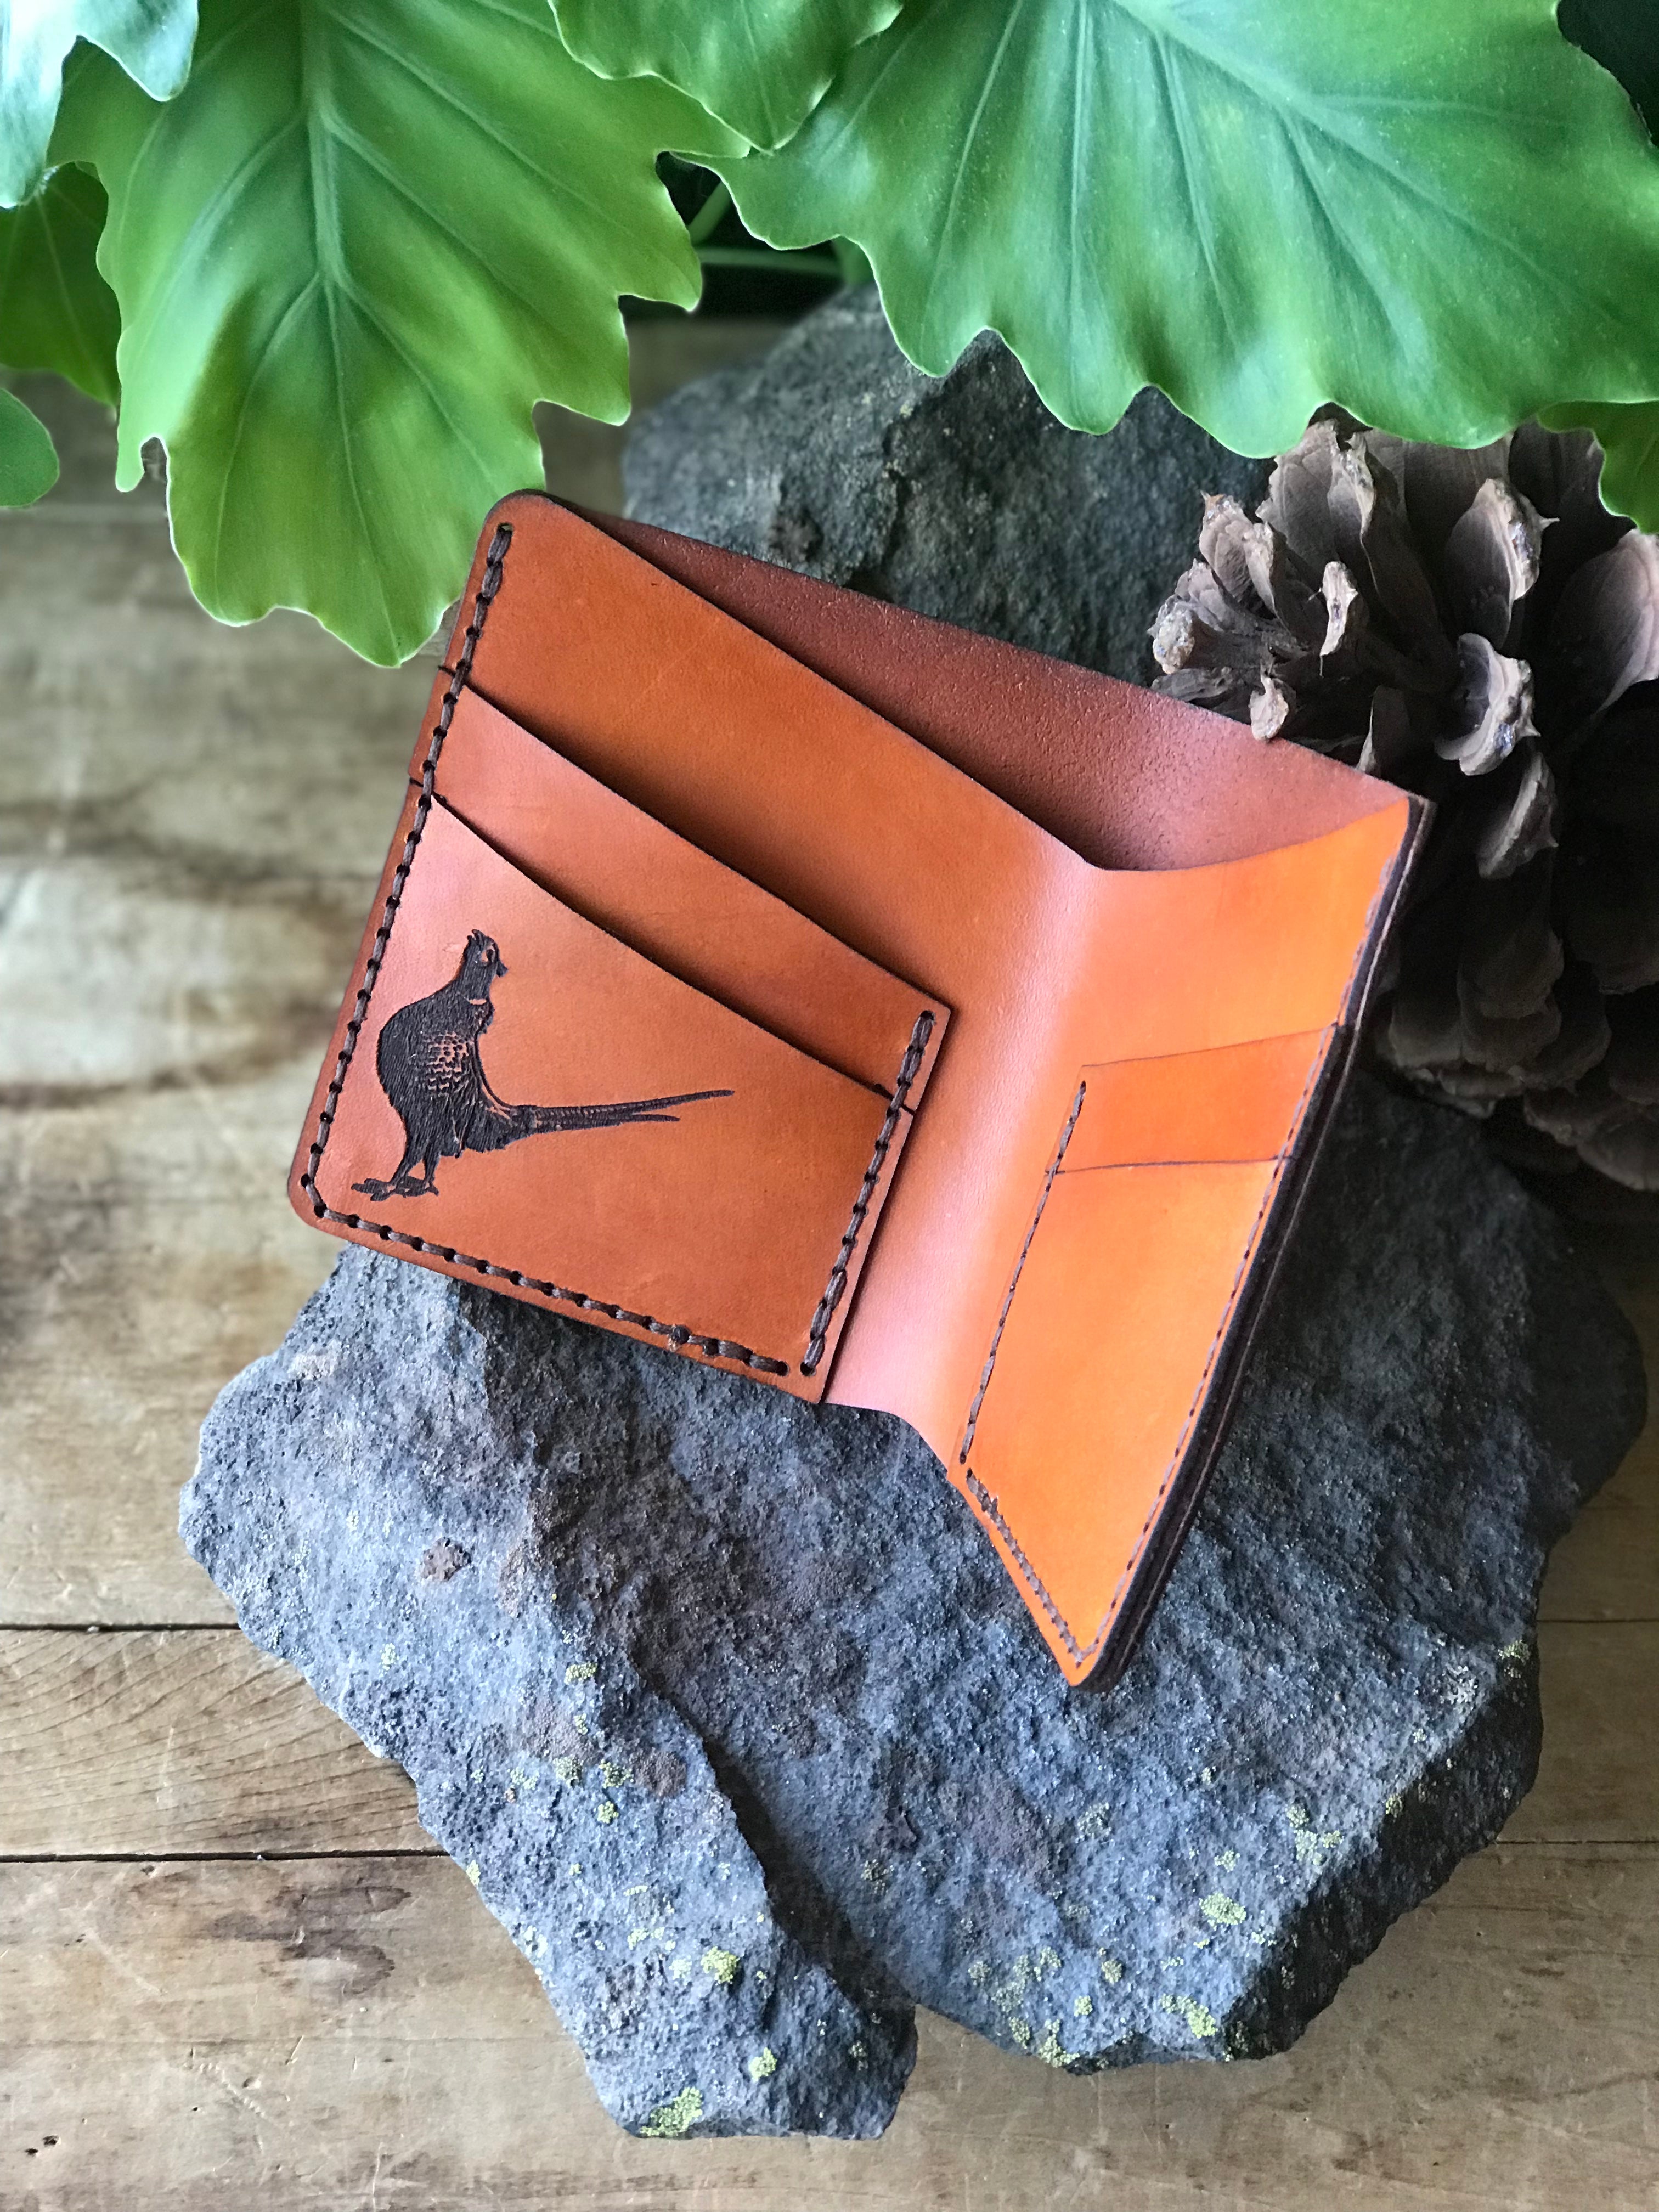 Pheasant Leather Bifold Wallet